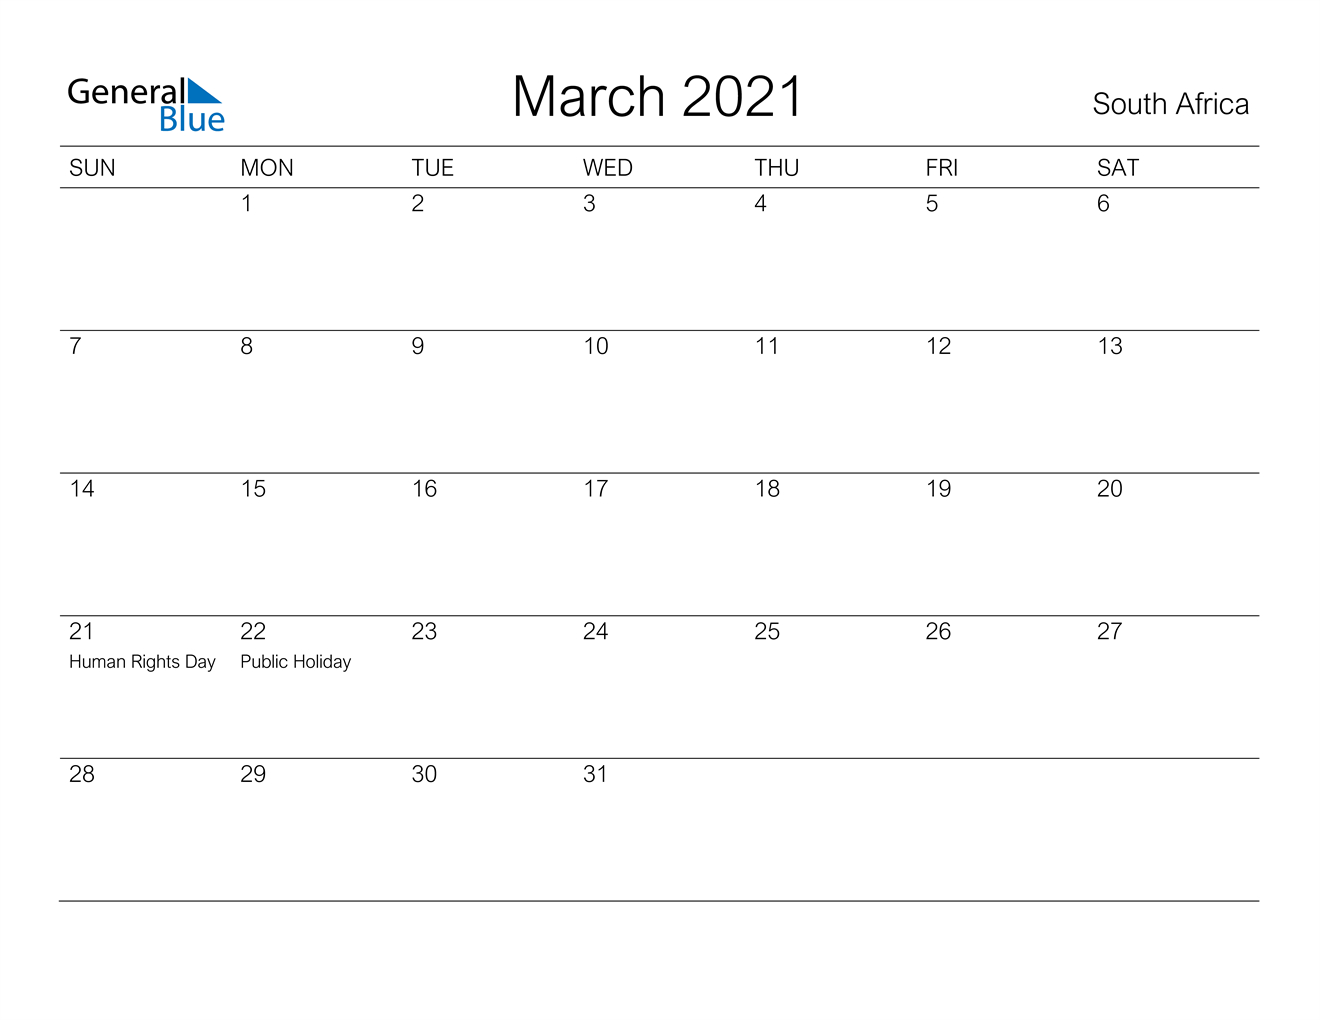 Catch May 2022 Calendar South Africa